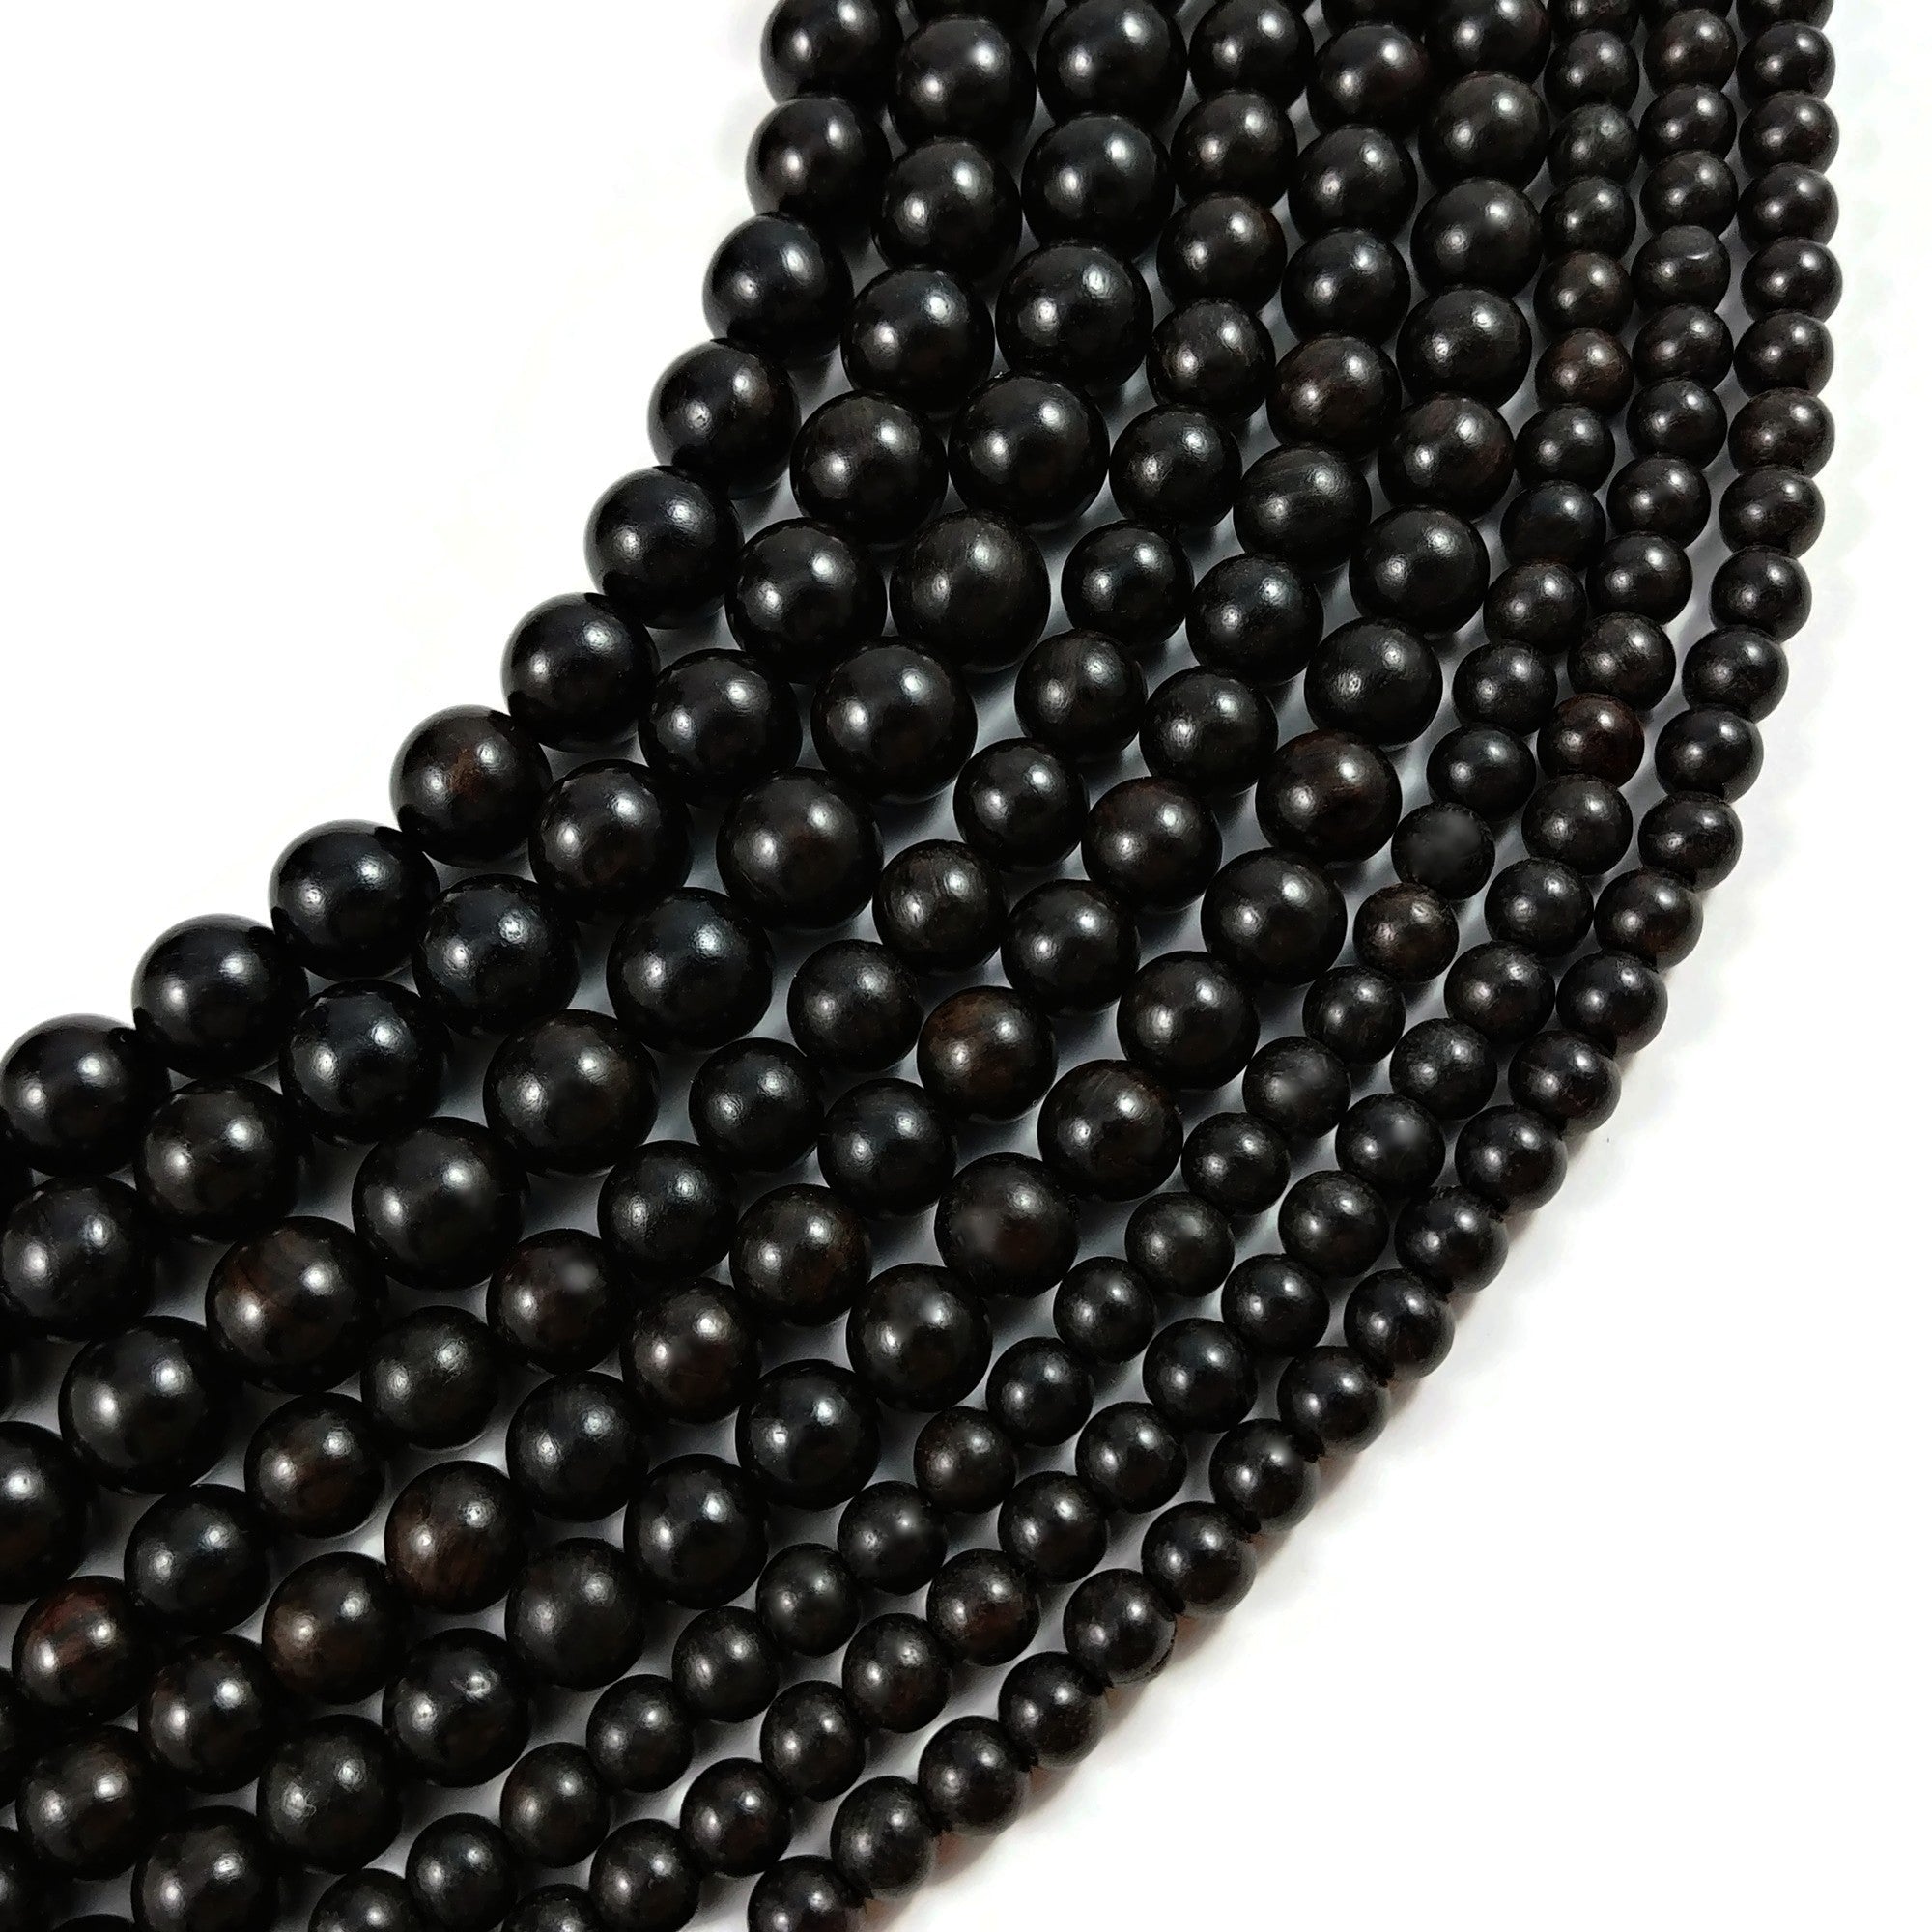 Ebony beads 6mm, 8mm, 10mm - Natural Mala Wooden Beads